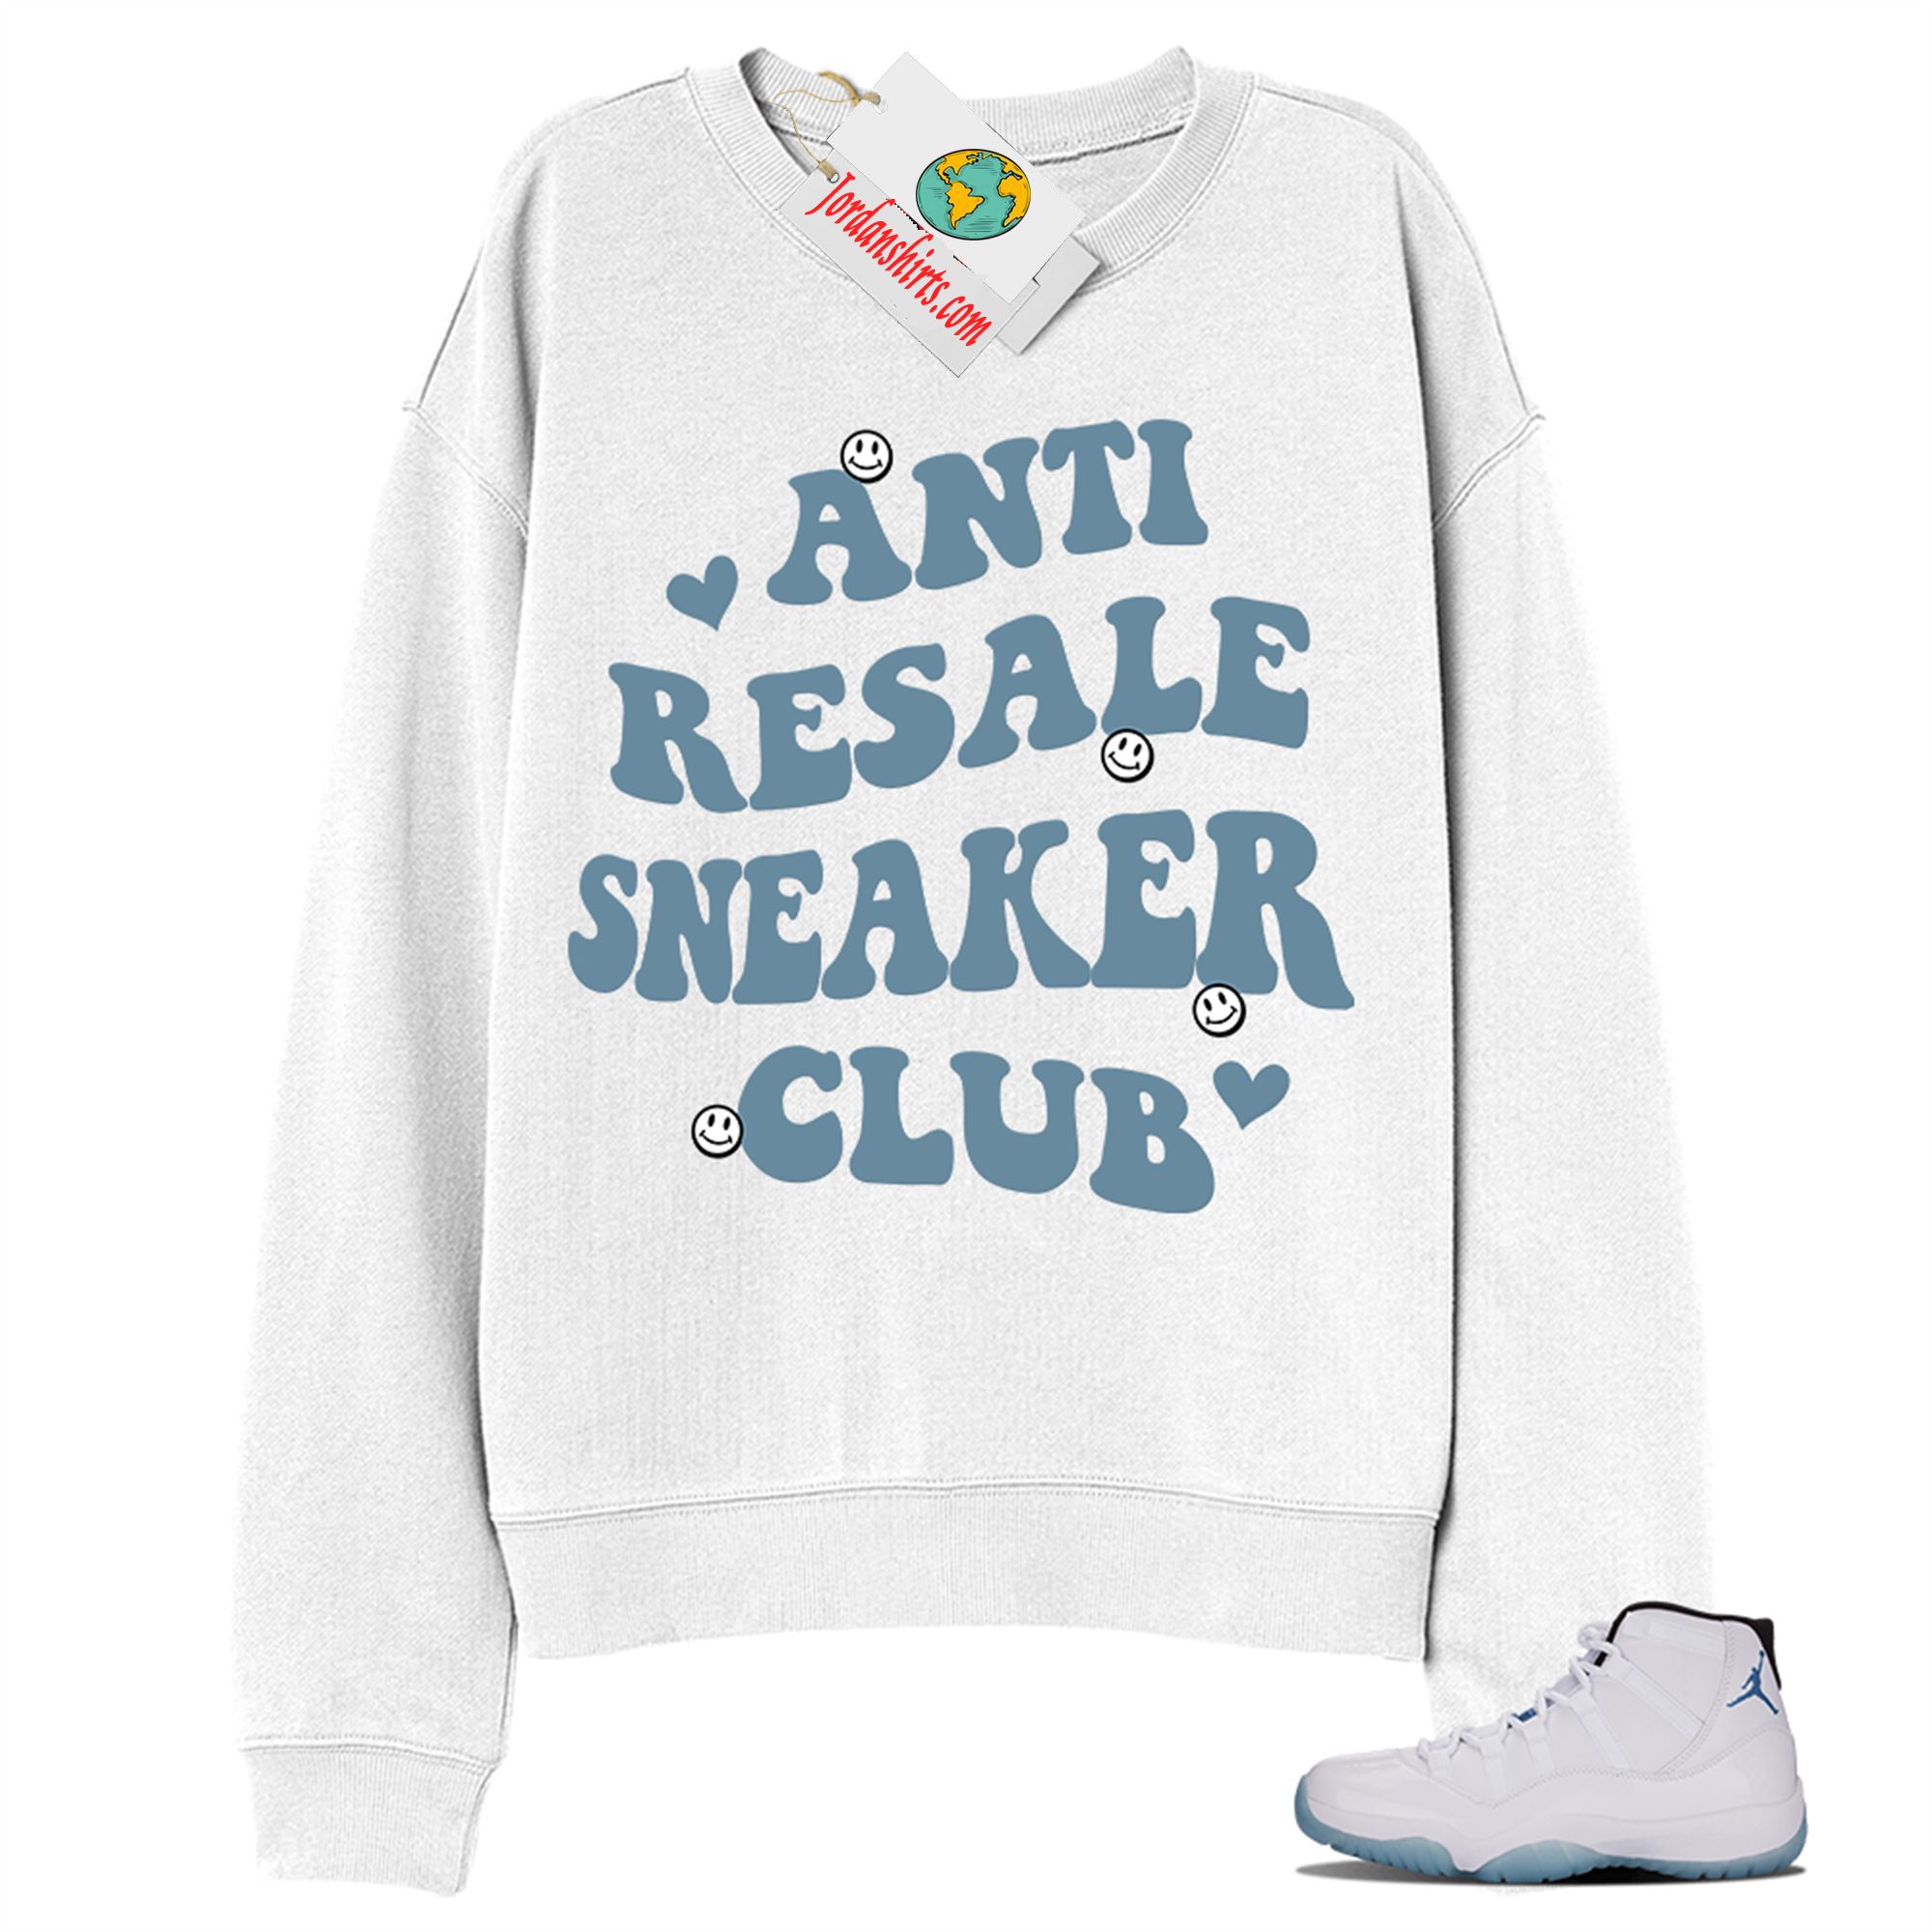 Jordan 11 Sweatshirt, Anti Resale Sneaker Club White Sweatshirt Air Jordan 11 Legend Blue 11s Size Up To 5xl